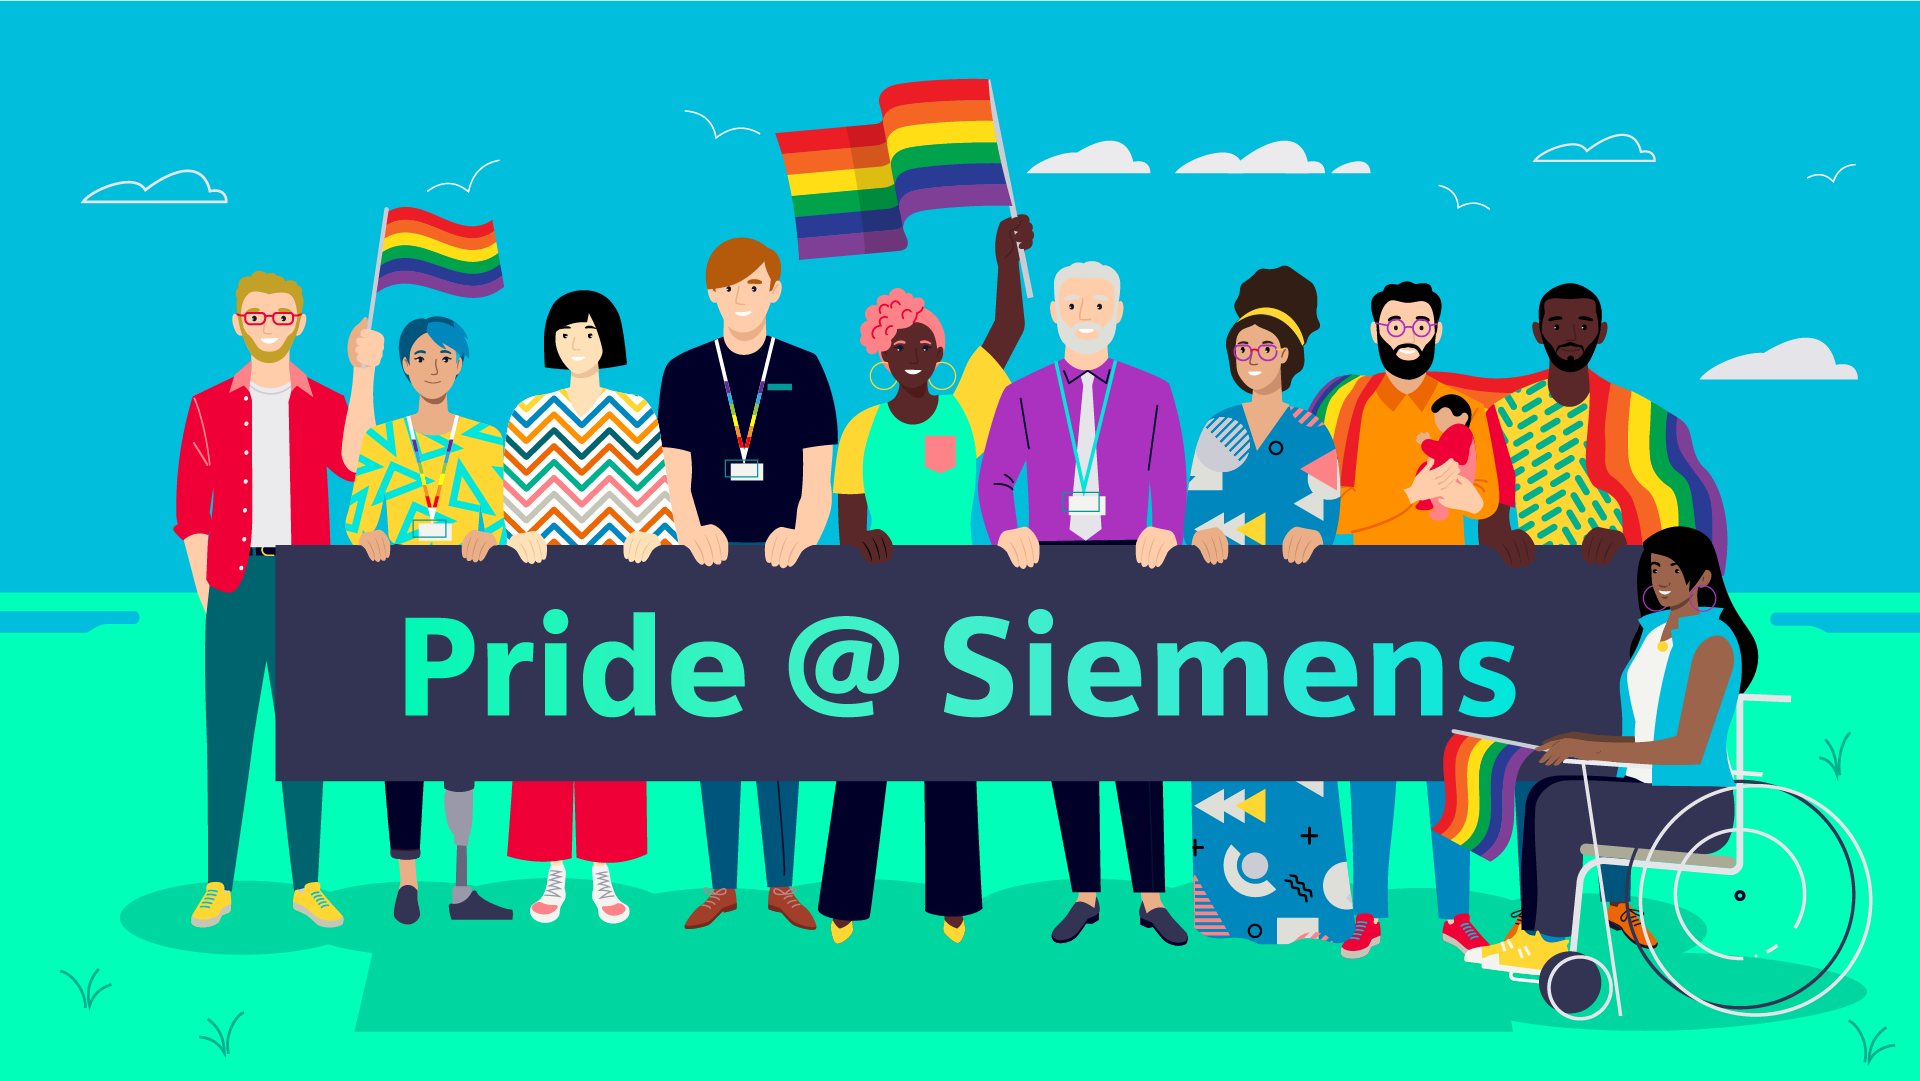 Pride at Siemens for the LGBTQIA+ community